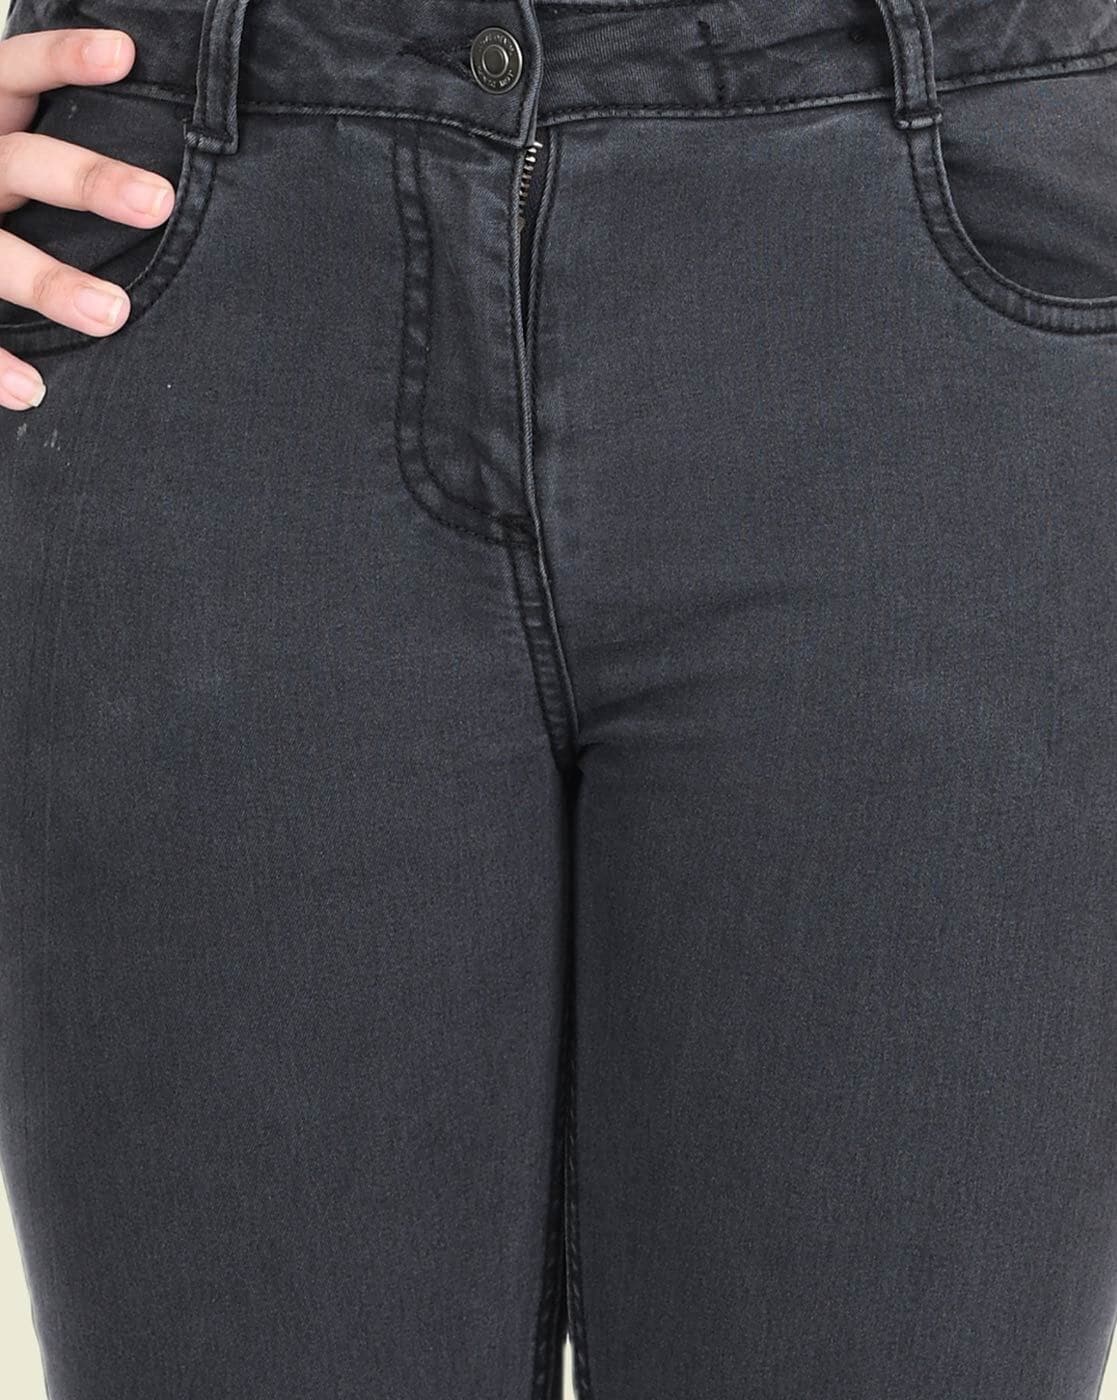 Buy Black Jeans & Jeggings for Girls by ZALIO Online